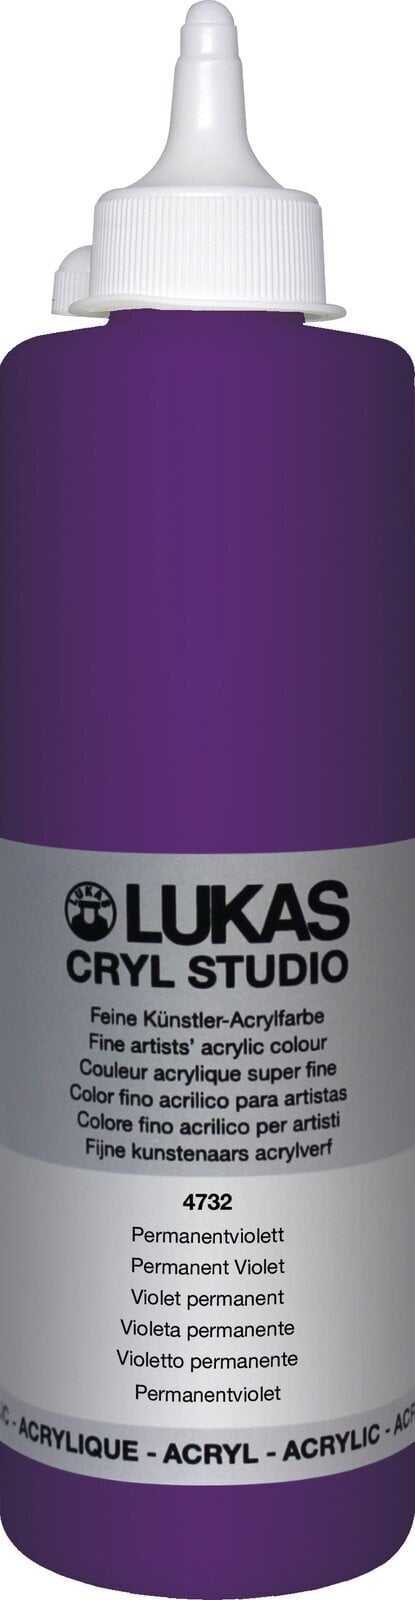 Pintura acrílica Lukas Cryl Studio Acrylic Paint Plastic Bottle Acrylic Paint Permanent Violet 500 ml 1 pc